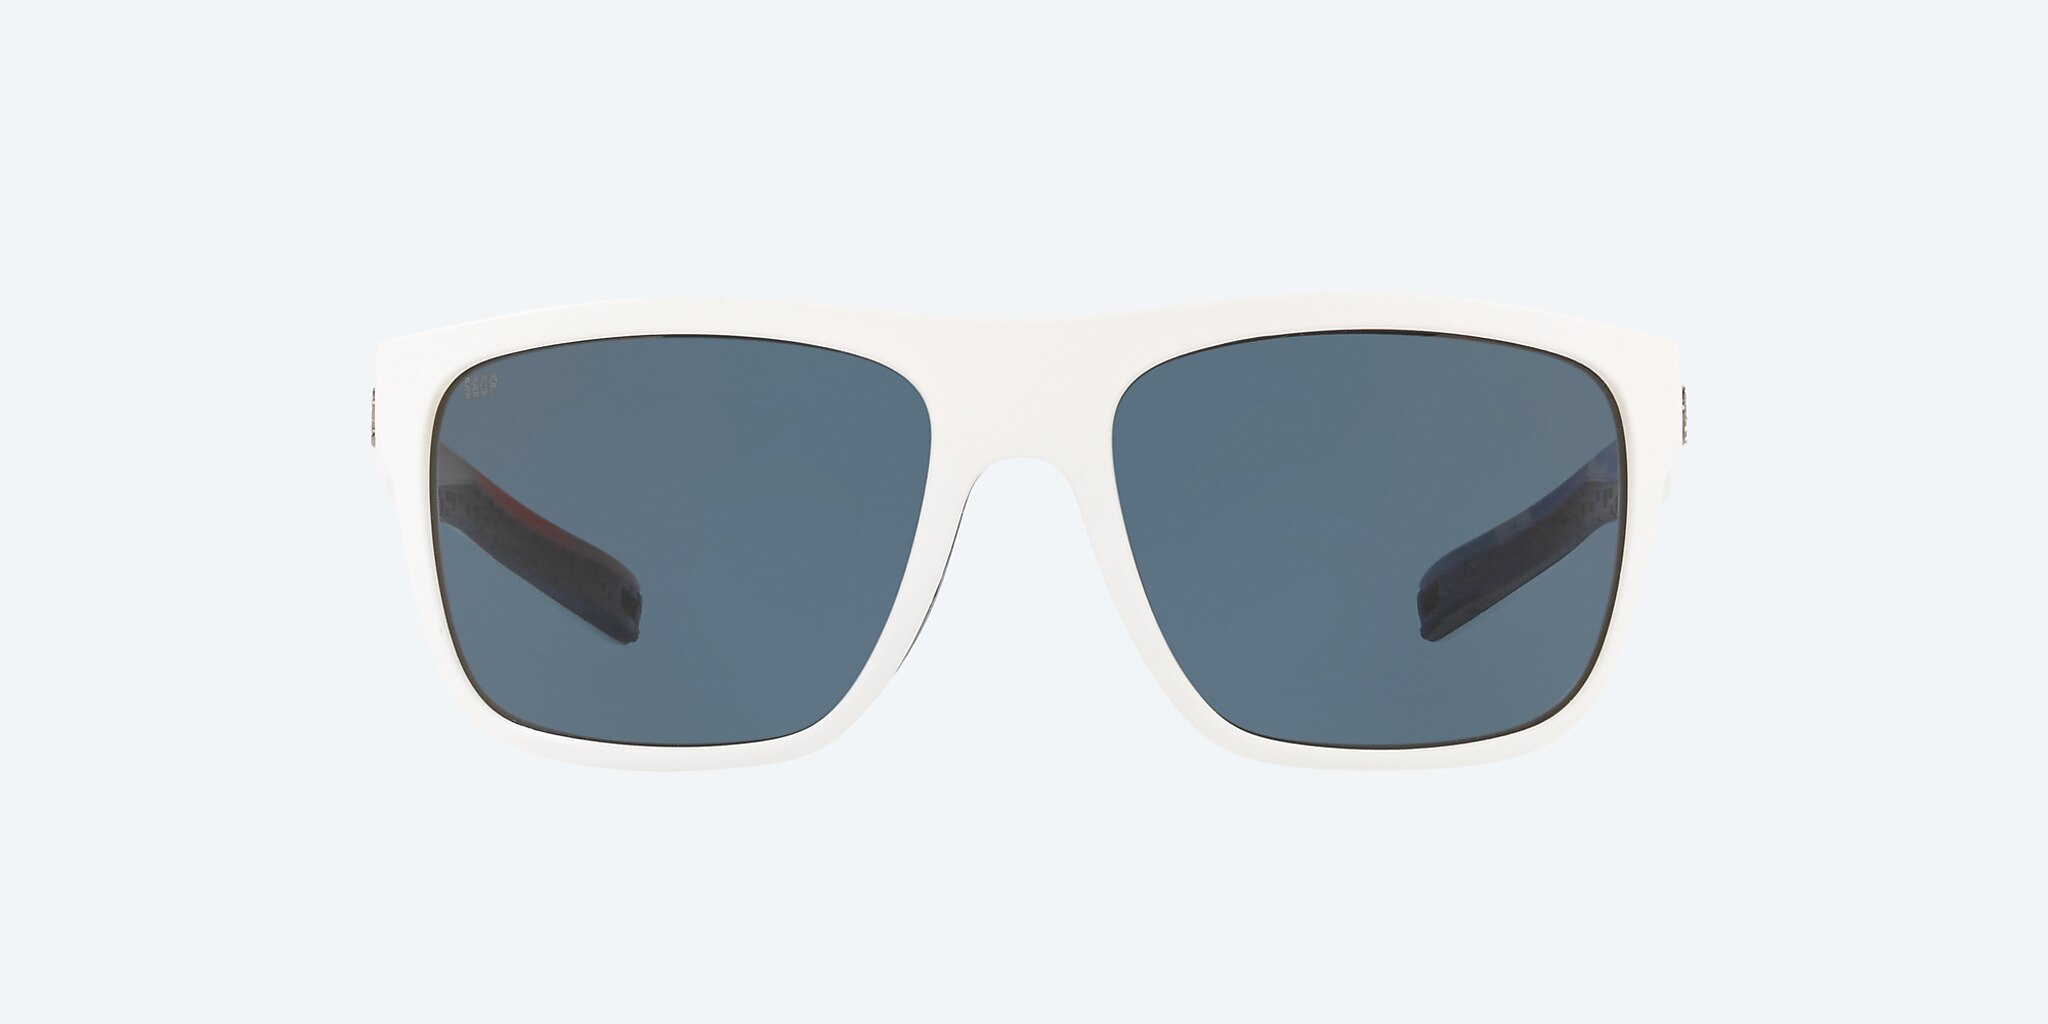 Broadbill Polarized Sunglasses in Gray